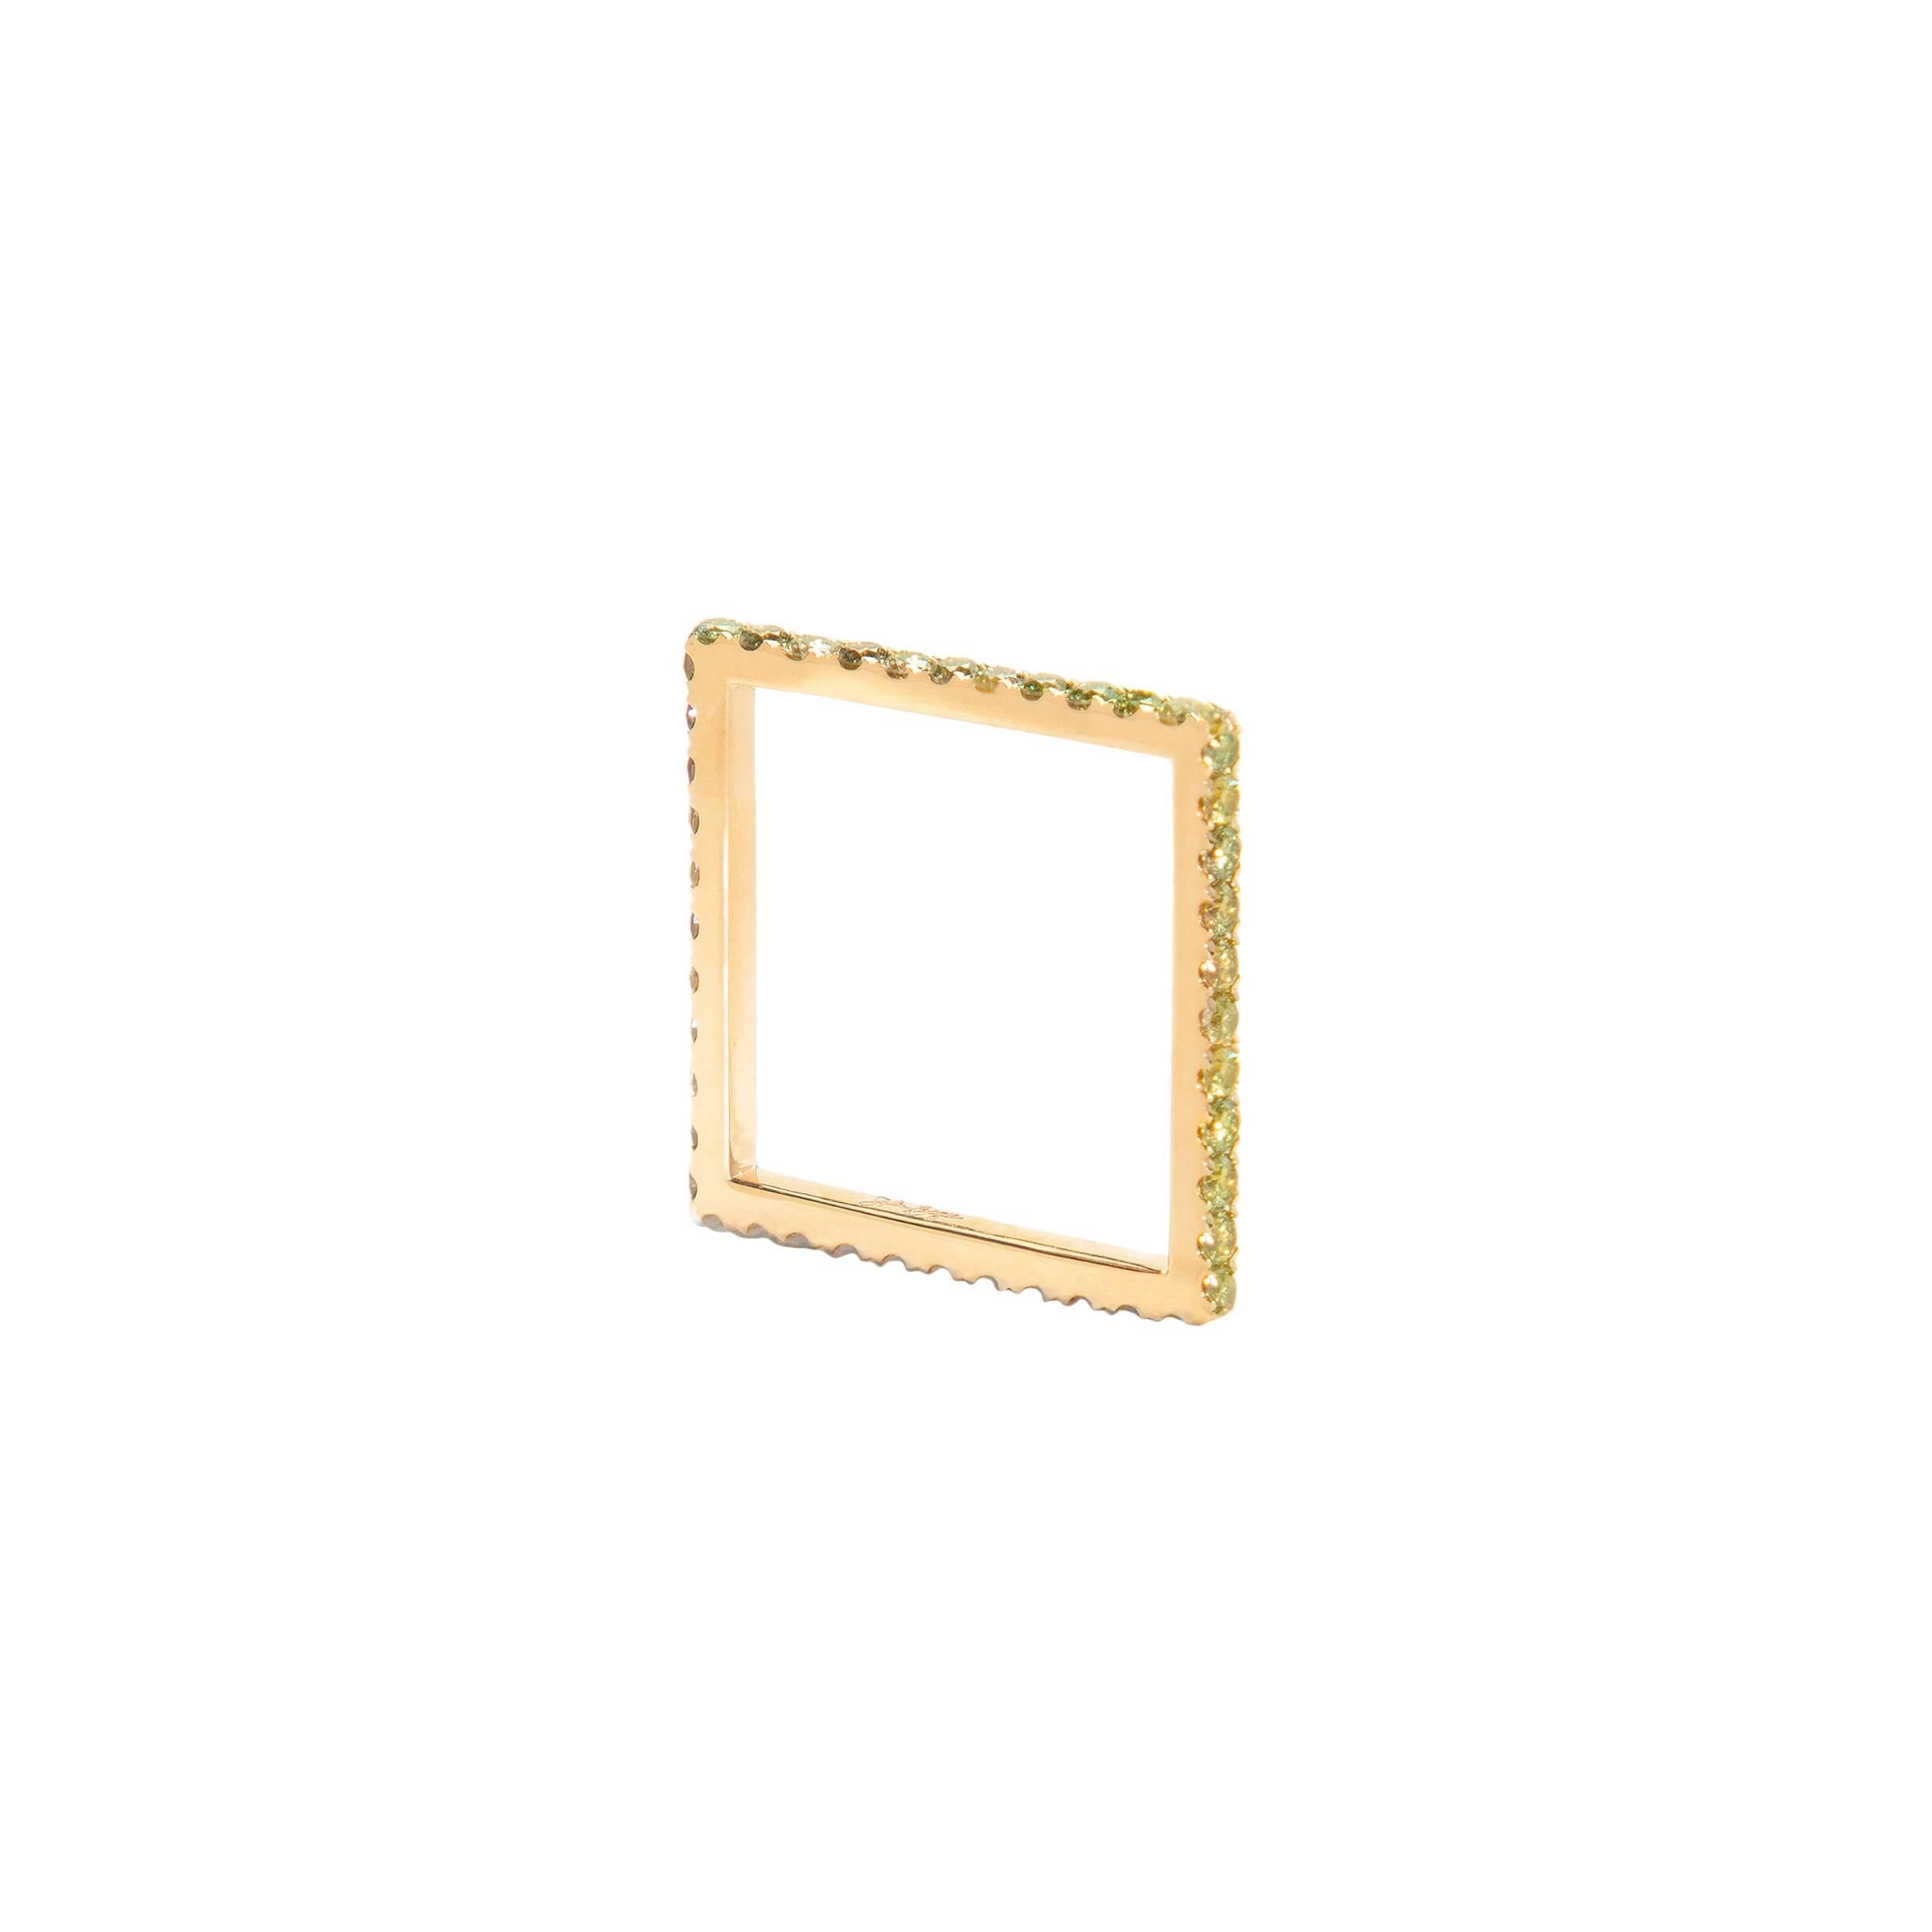 Sophie Birgitt 18 Karat Gold Geometric Square Cocktail Knuckle/Pinky Ring For Sale